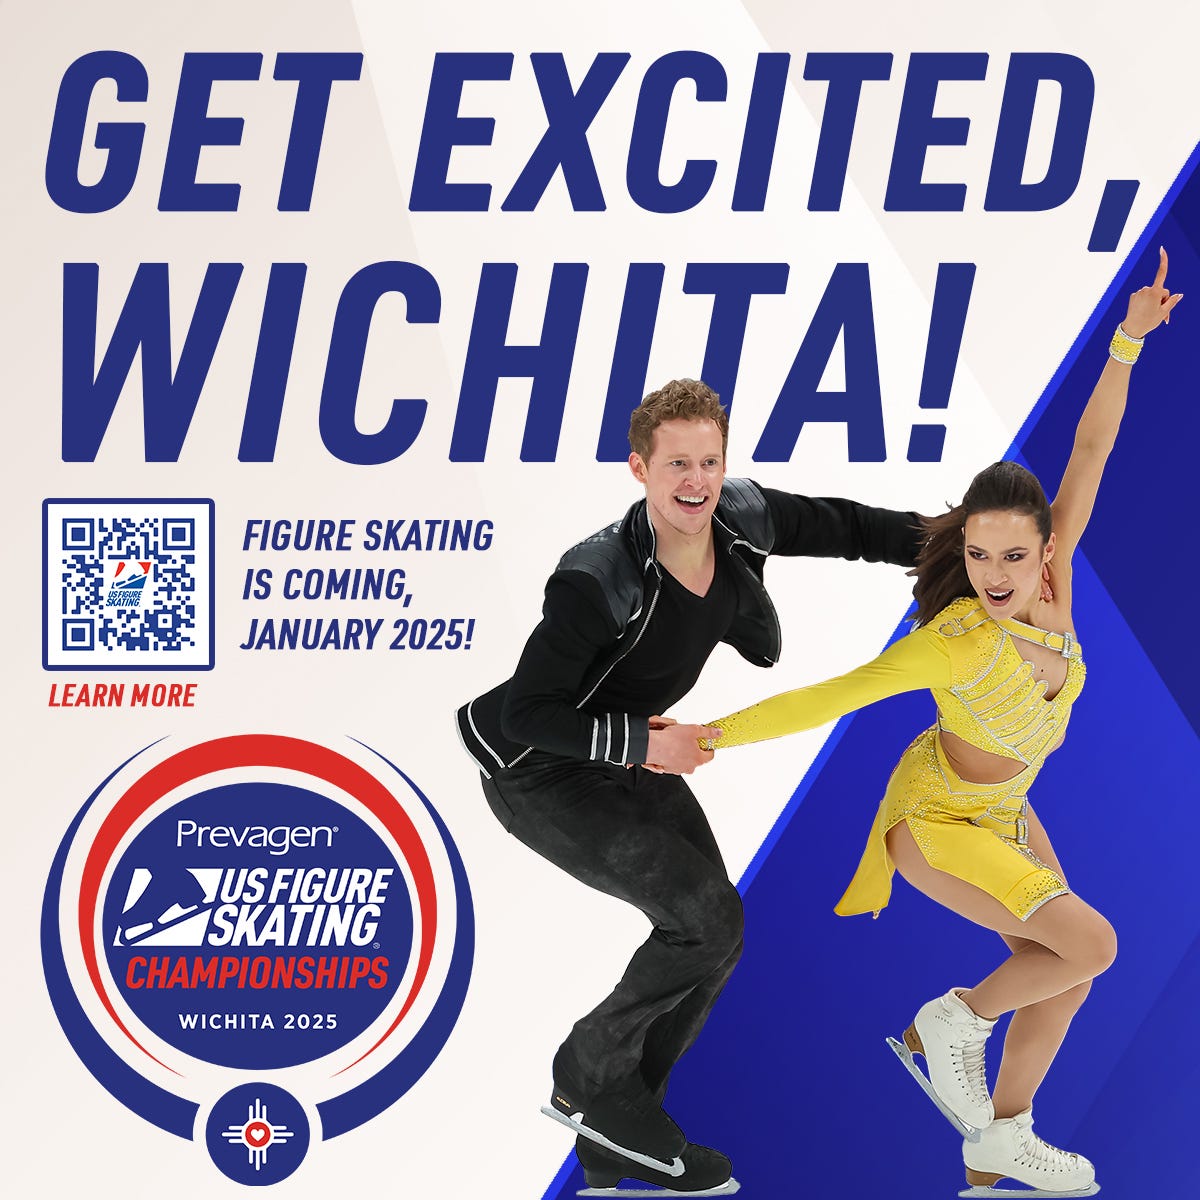   
																U.S. Figure Skating Championships to be held in Wichita in 2025 
															 